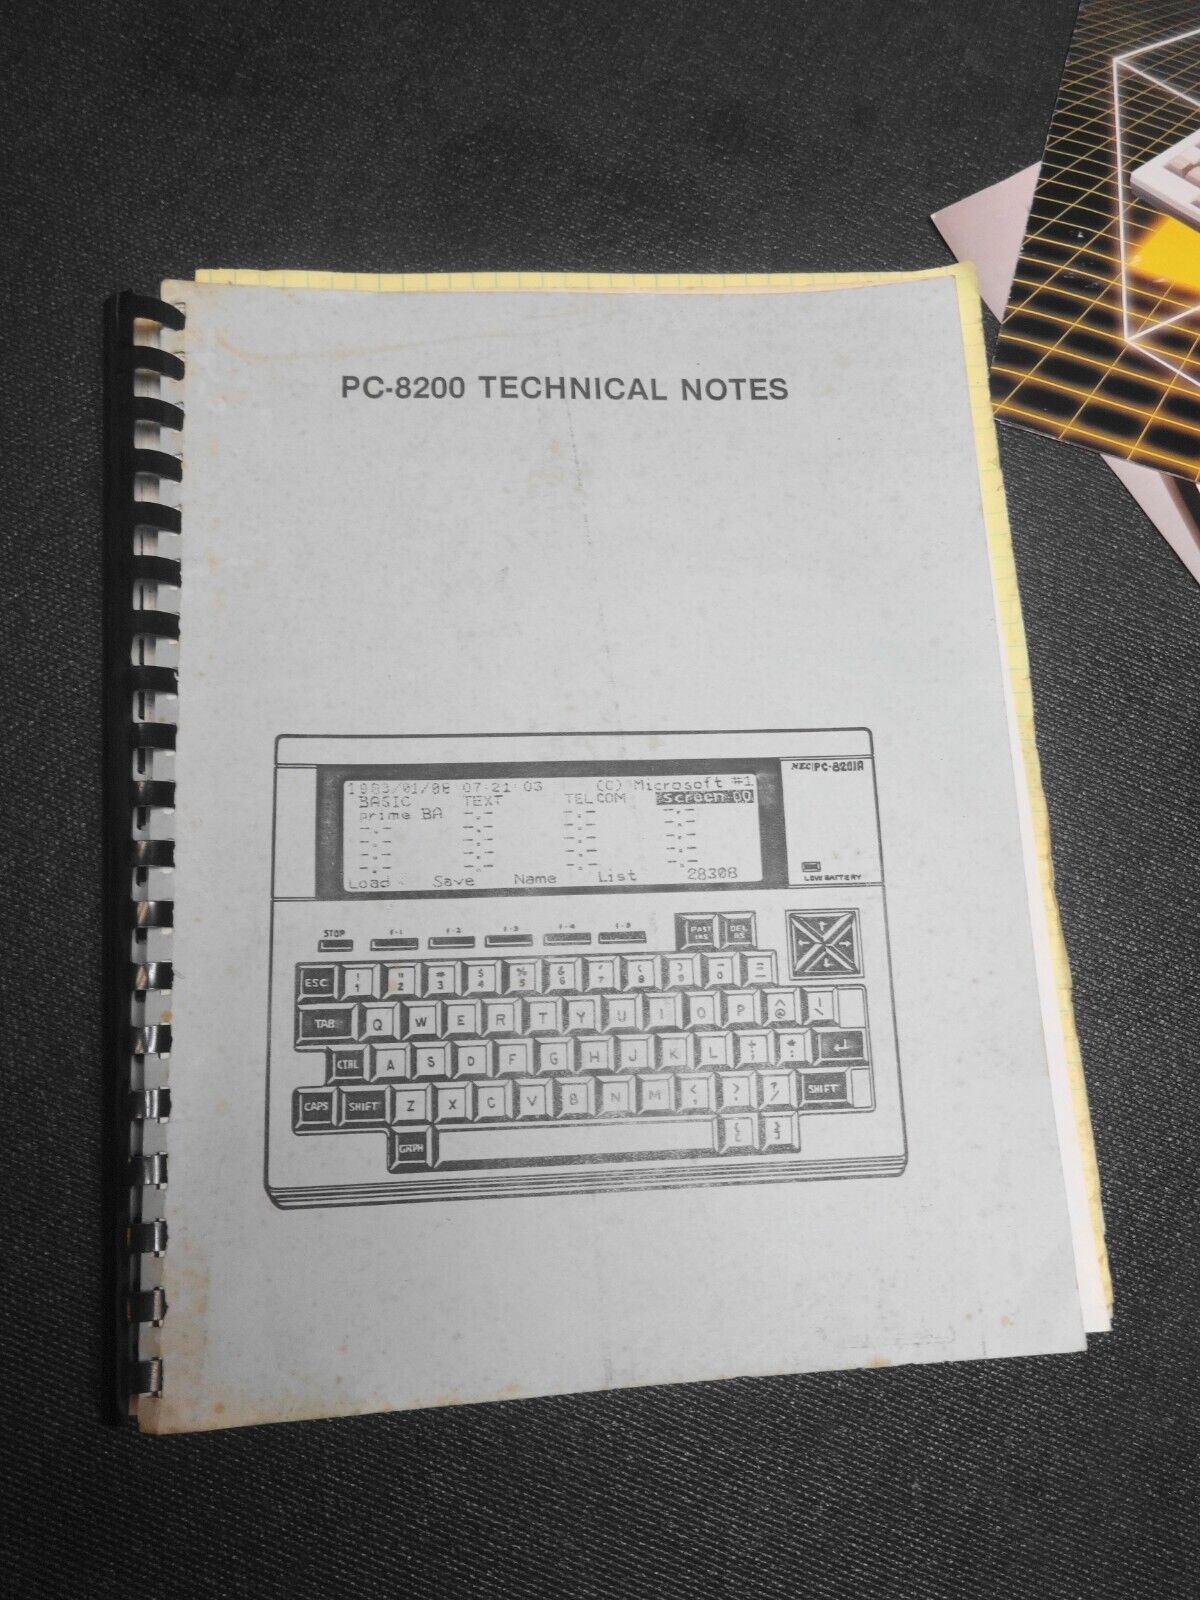 Vintage 1983 NEC PC-8201A Portable Computer w/ Manual, Brochure, Guide & Power